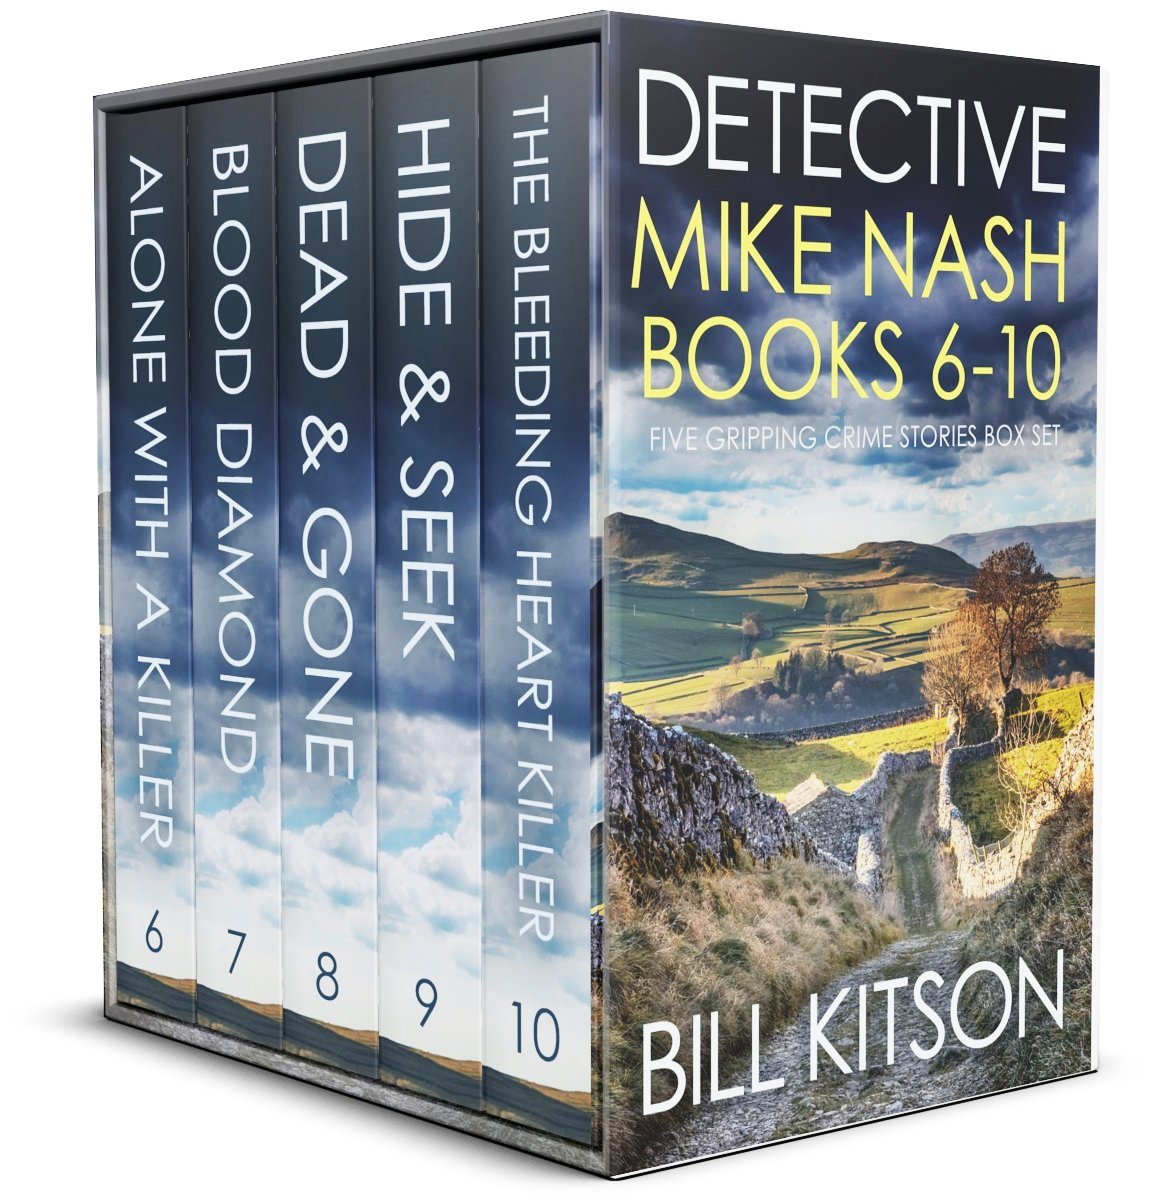 DETECTIVE MIKE NASH BOOKS 6-10 cover publish.jpg